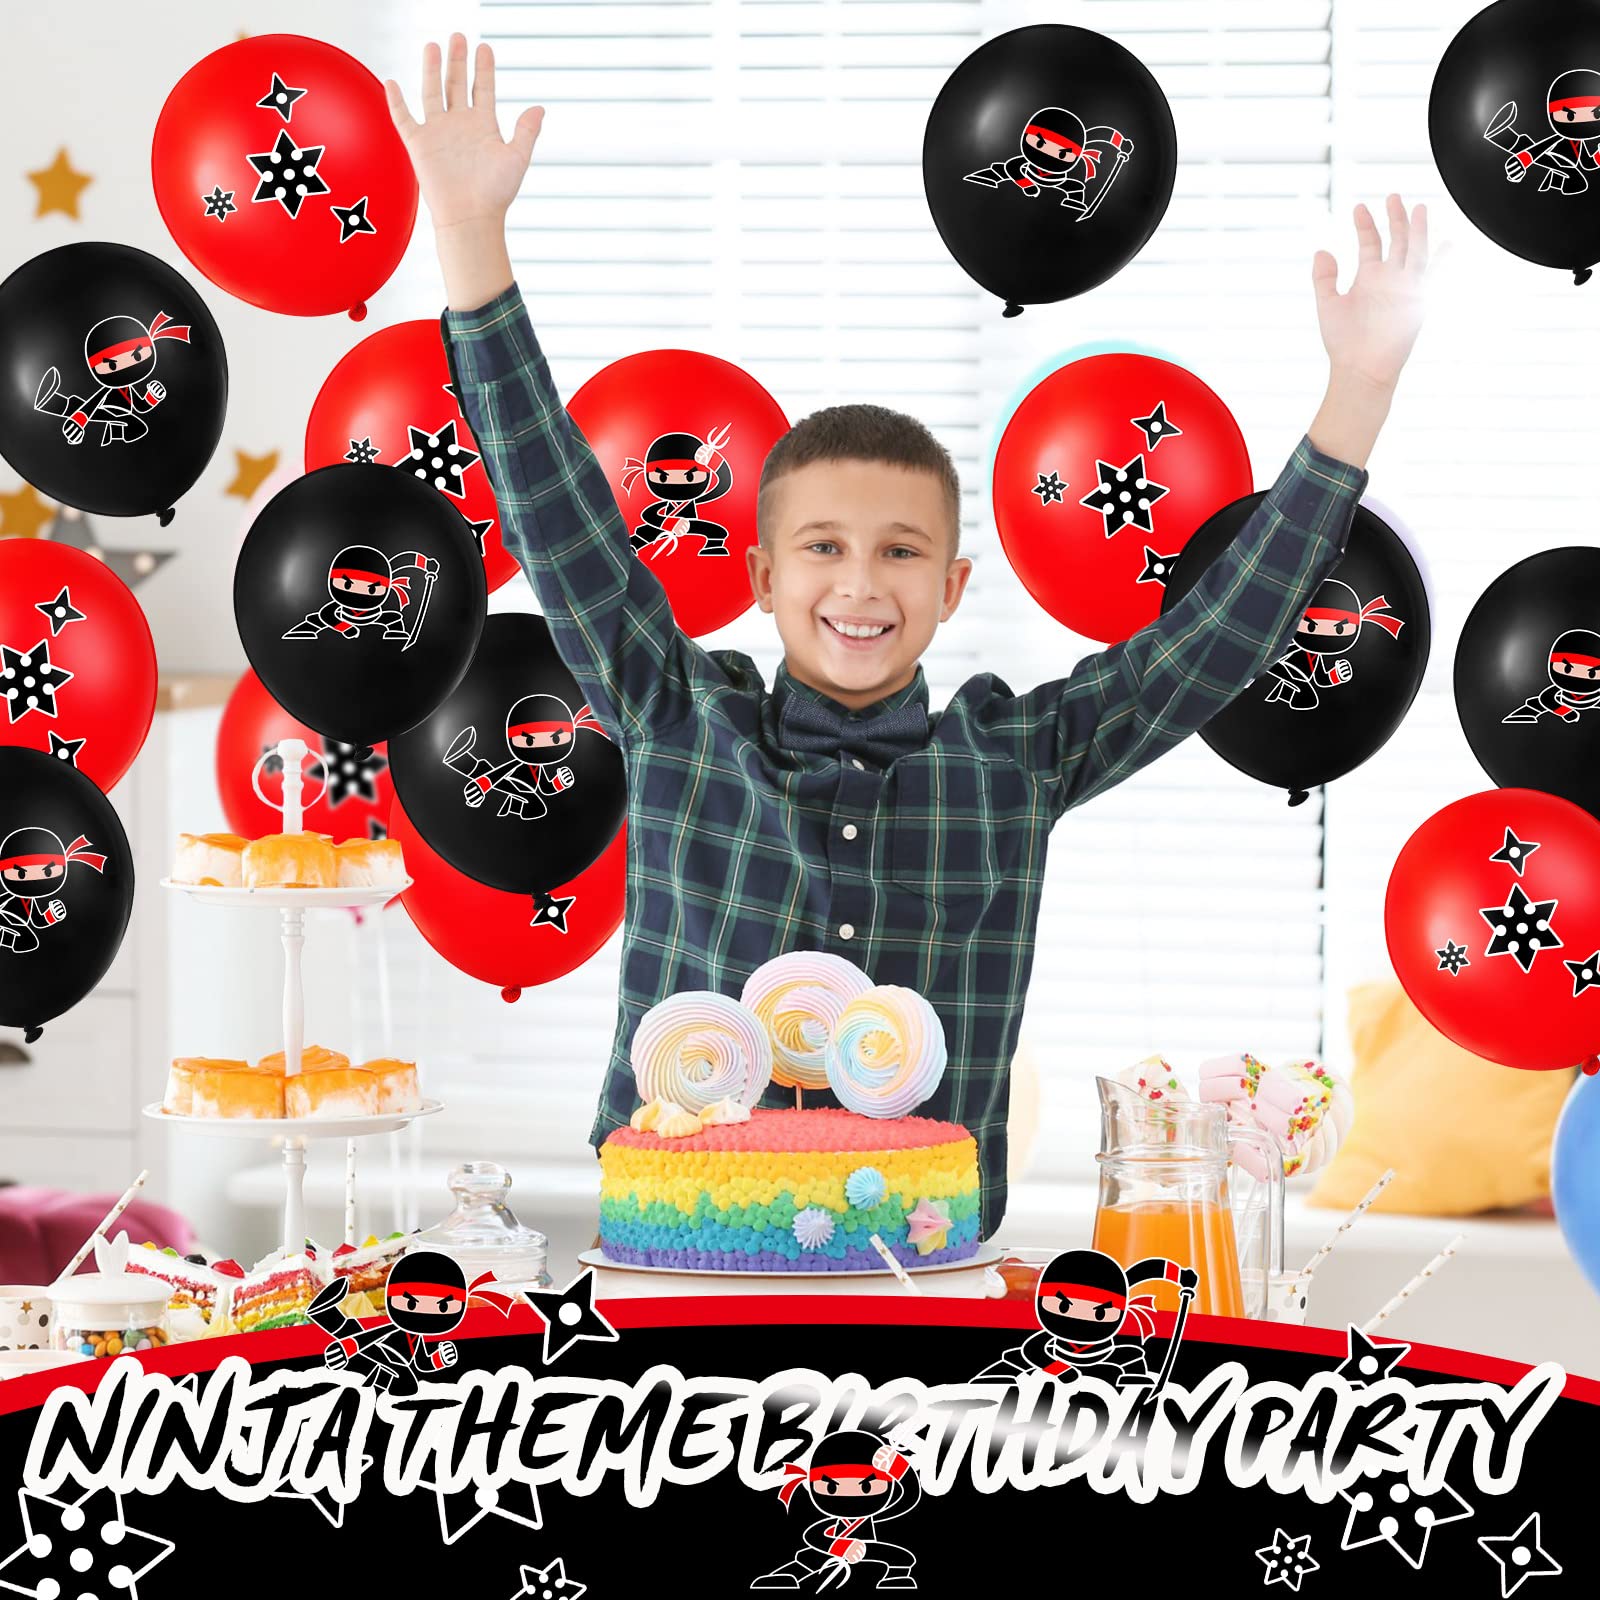 60 Pcs Ninja Balloons for Kids Ninja Birthday Party Favors Ninja Party Decorations Ninja Theme Party Supplies, Black and Red Latex Balloons